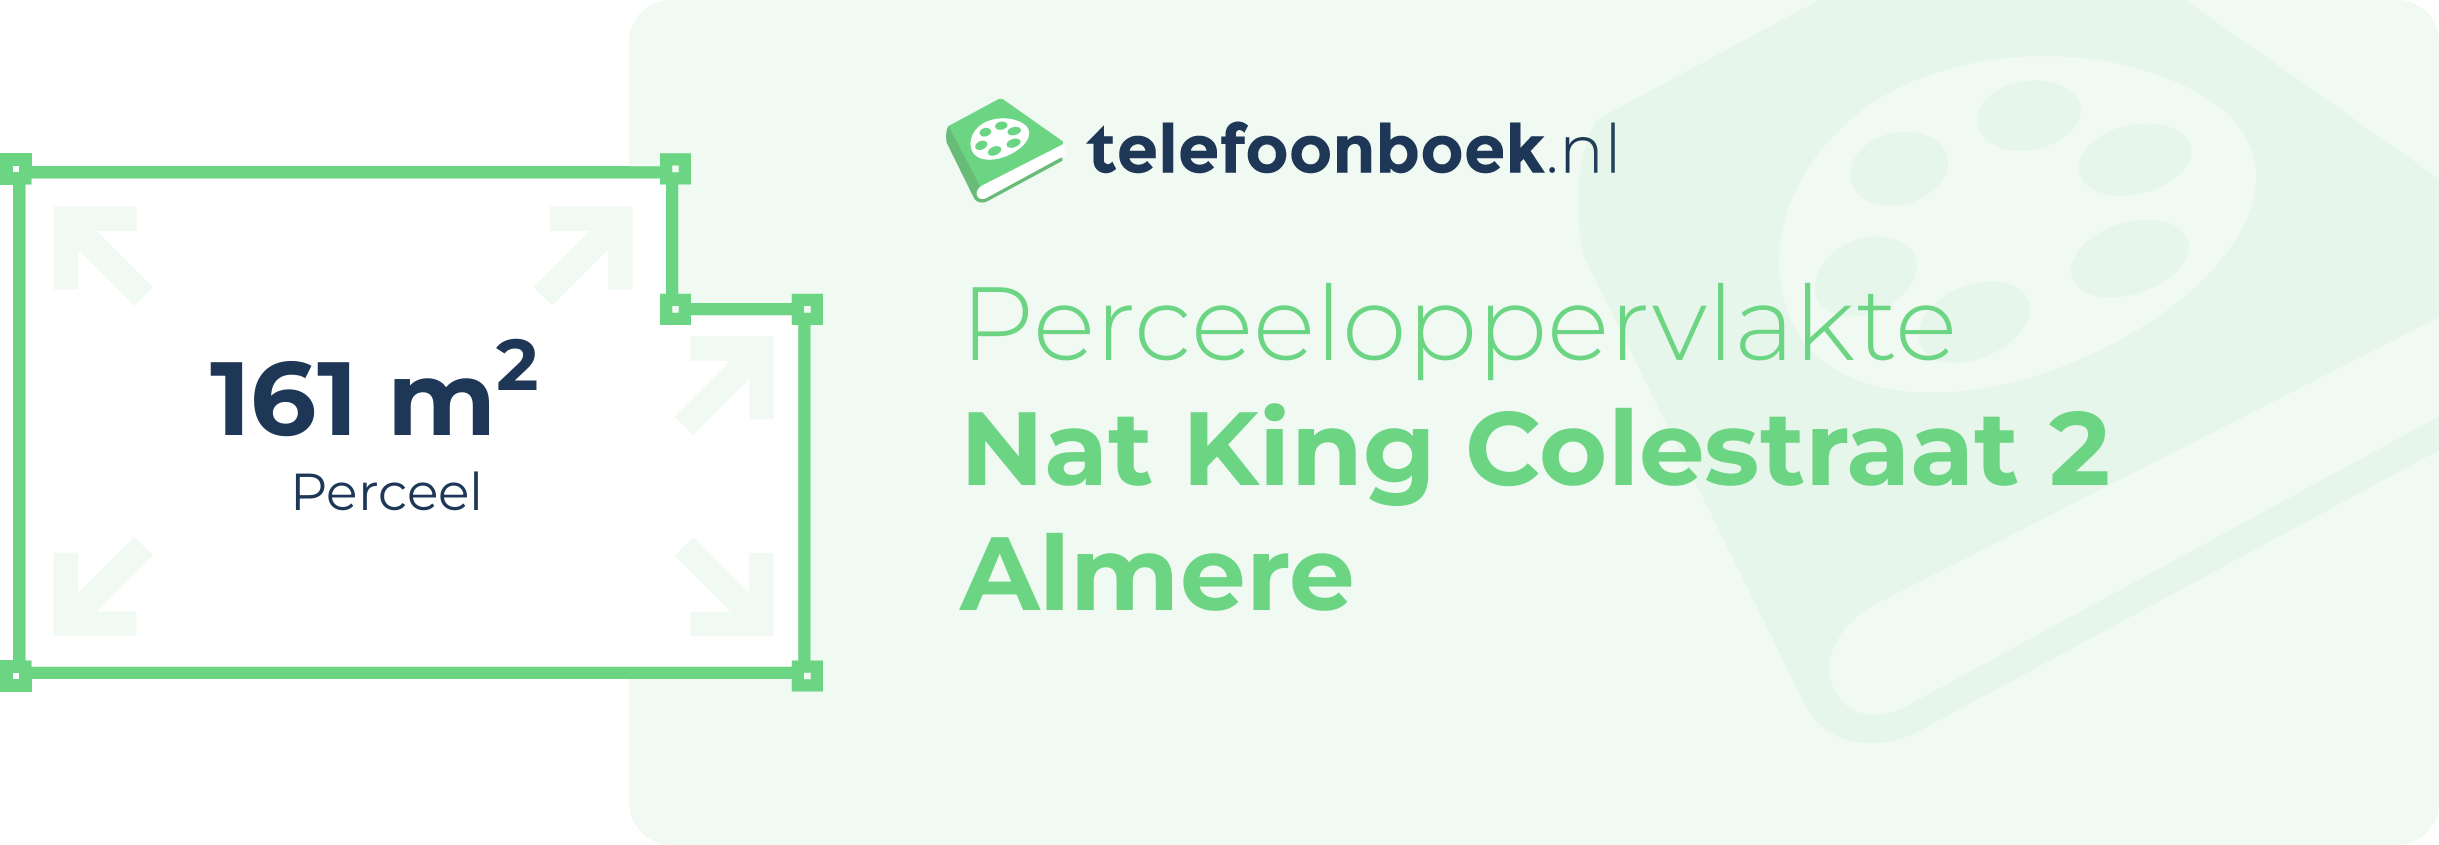 Perceeloppervlakte Nat King Colestraat 2 Almere